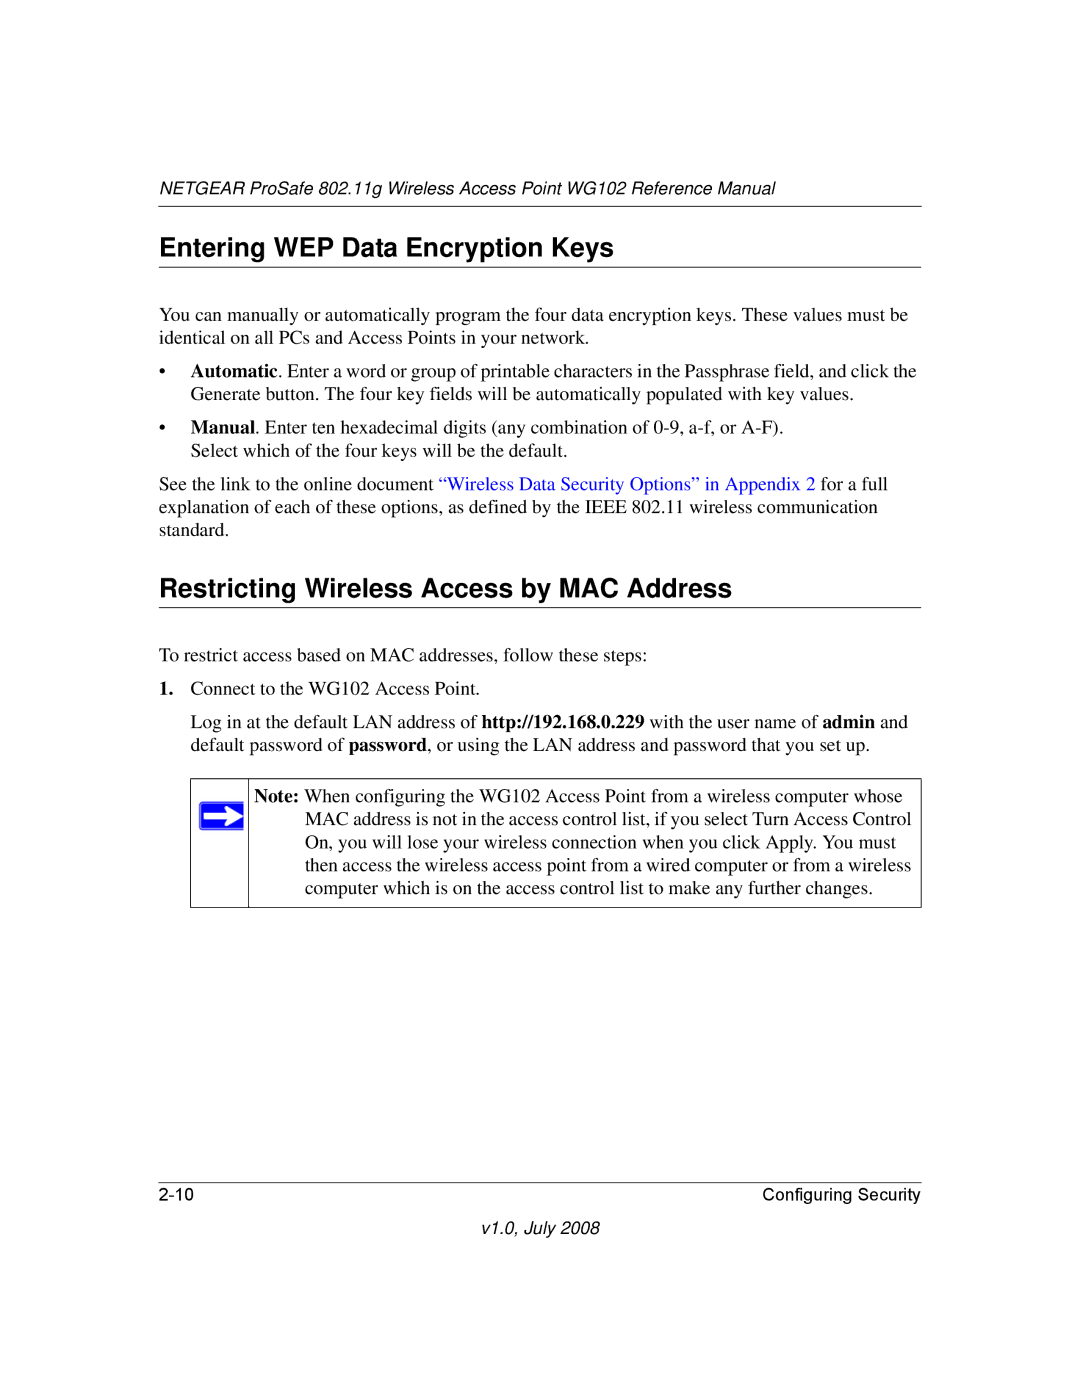 NETGEAR WG102NA manual Entering WEP Data Encryption Keys, Restricting Wireless Access by MAC Address 